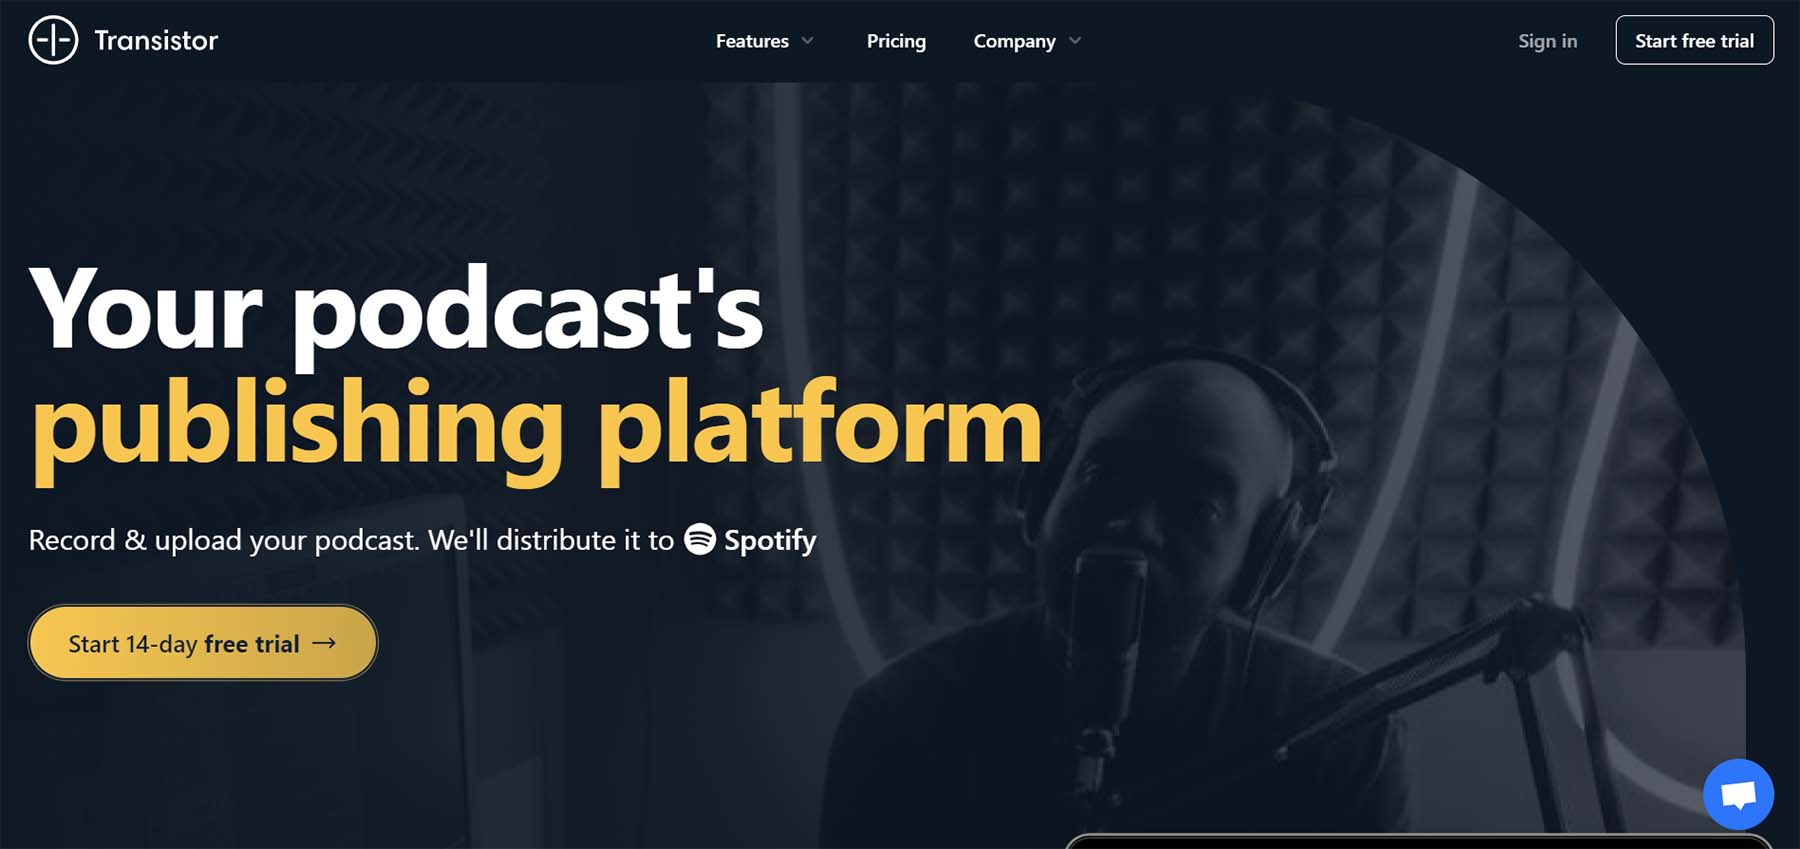 Transistor, a podcast hosting platform